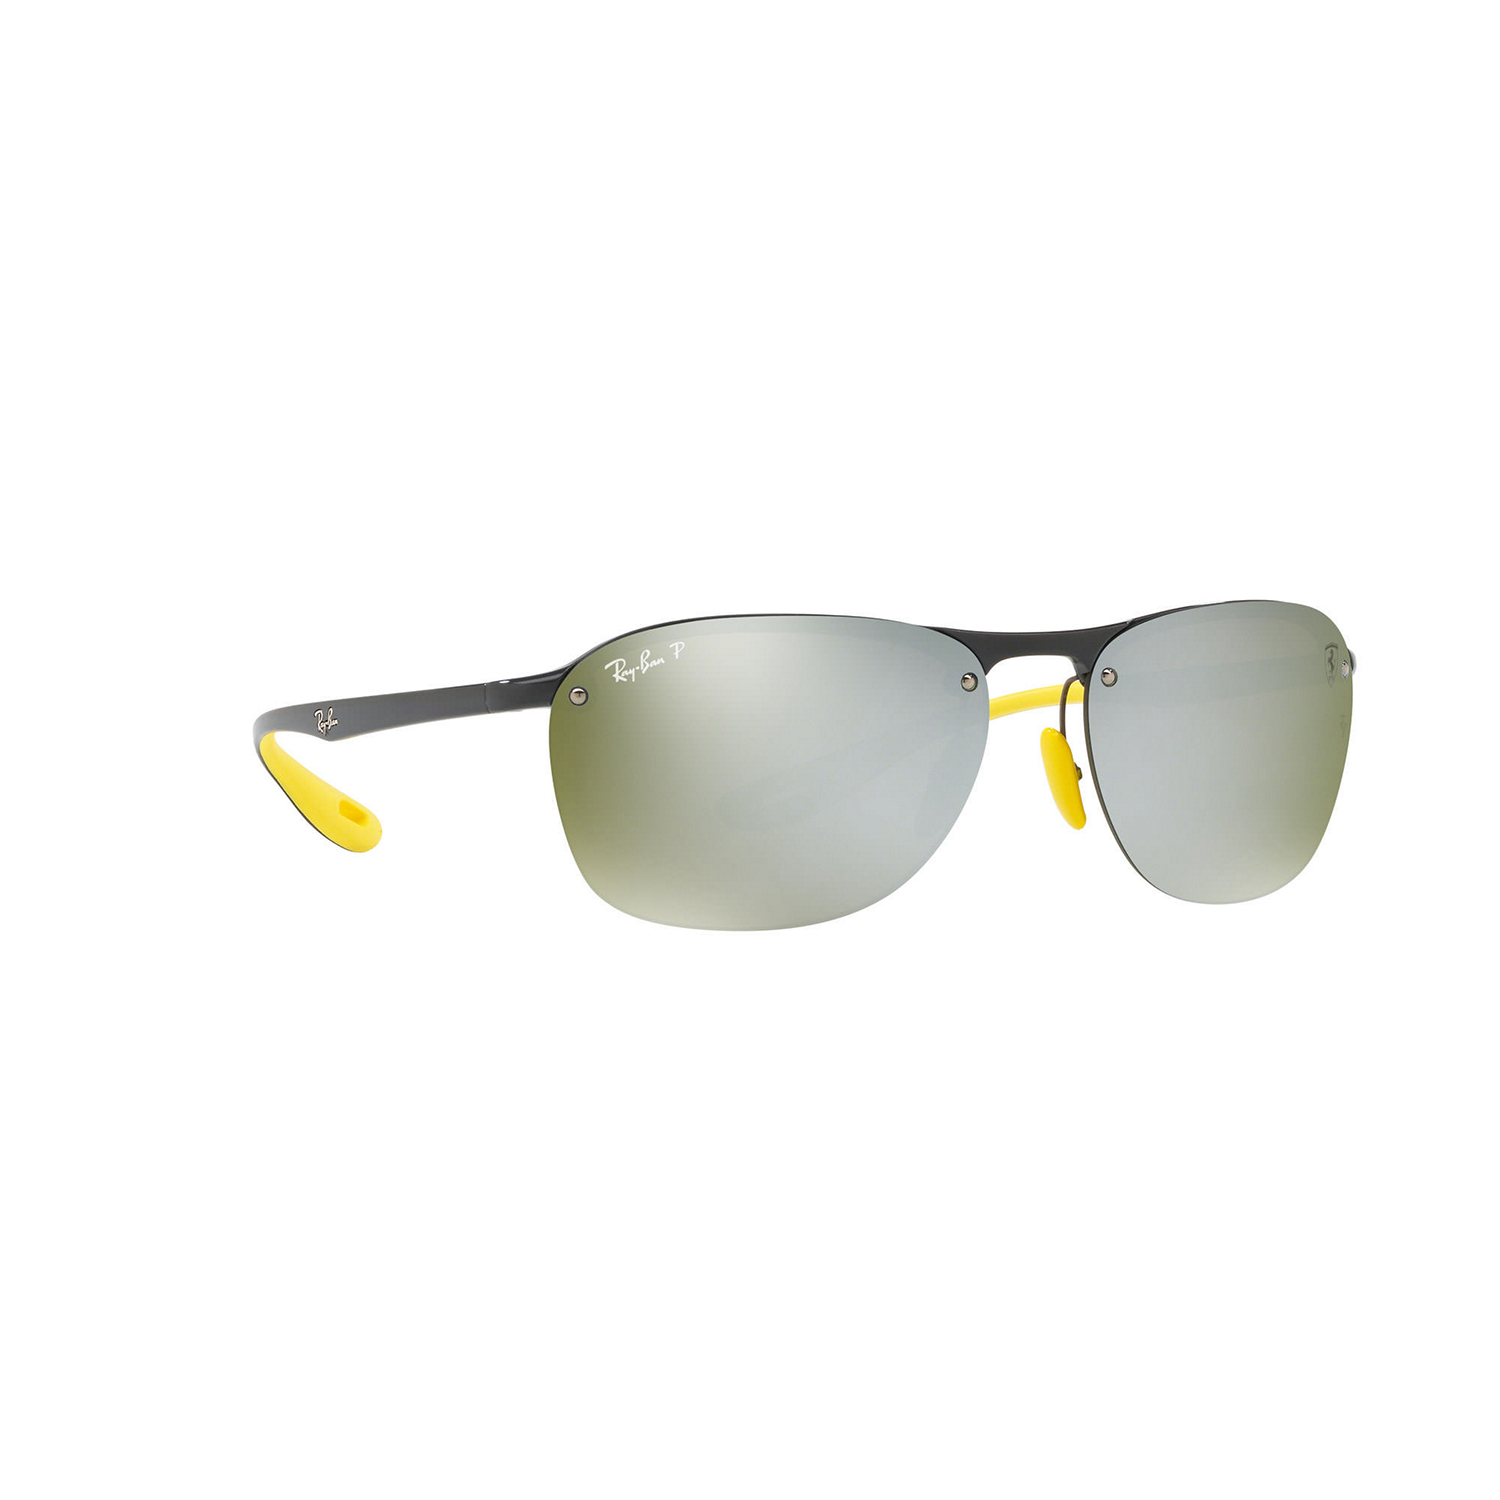 Irregular Sunglasses 0RB4302M